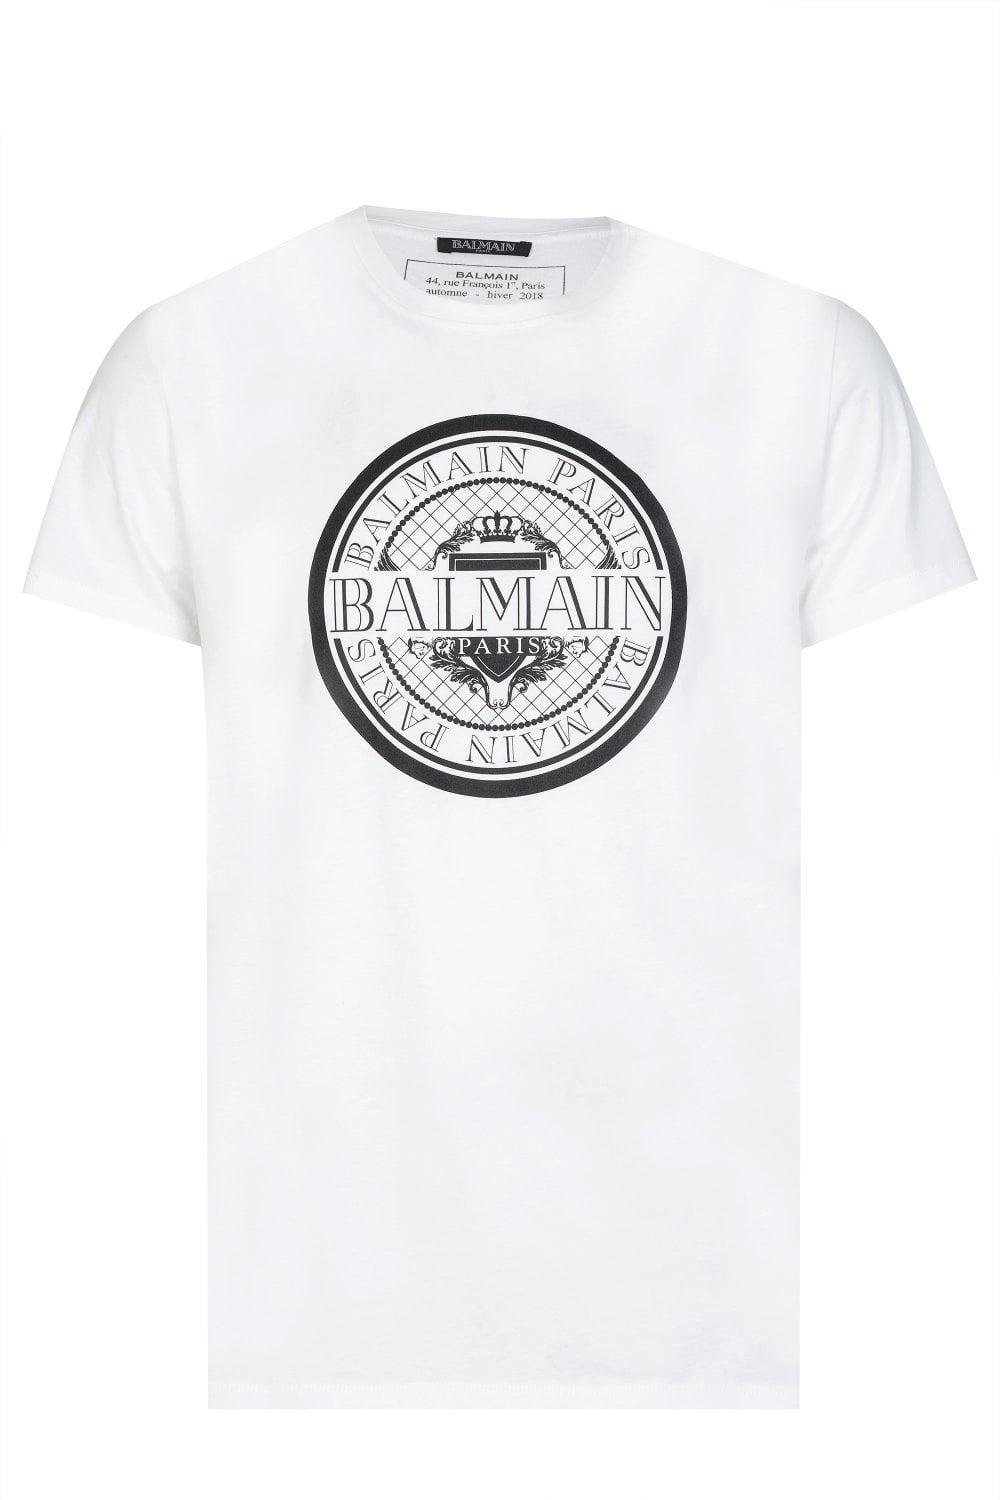 Balmain Paris Logo - BALMAIN Balmain Paris Coin Logo T-shirt - Uncategorised from Circle ...